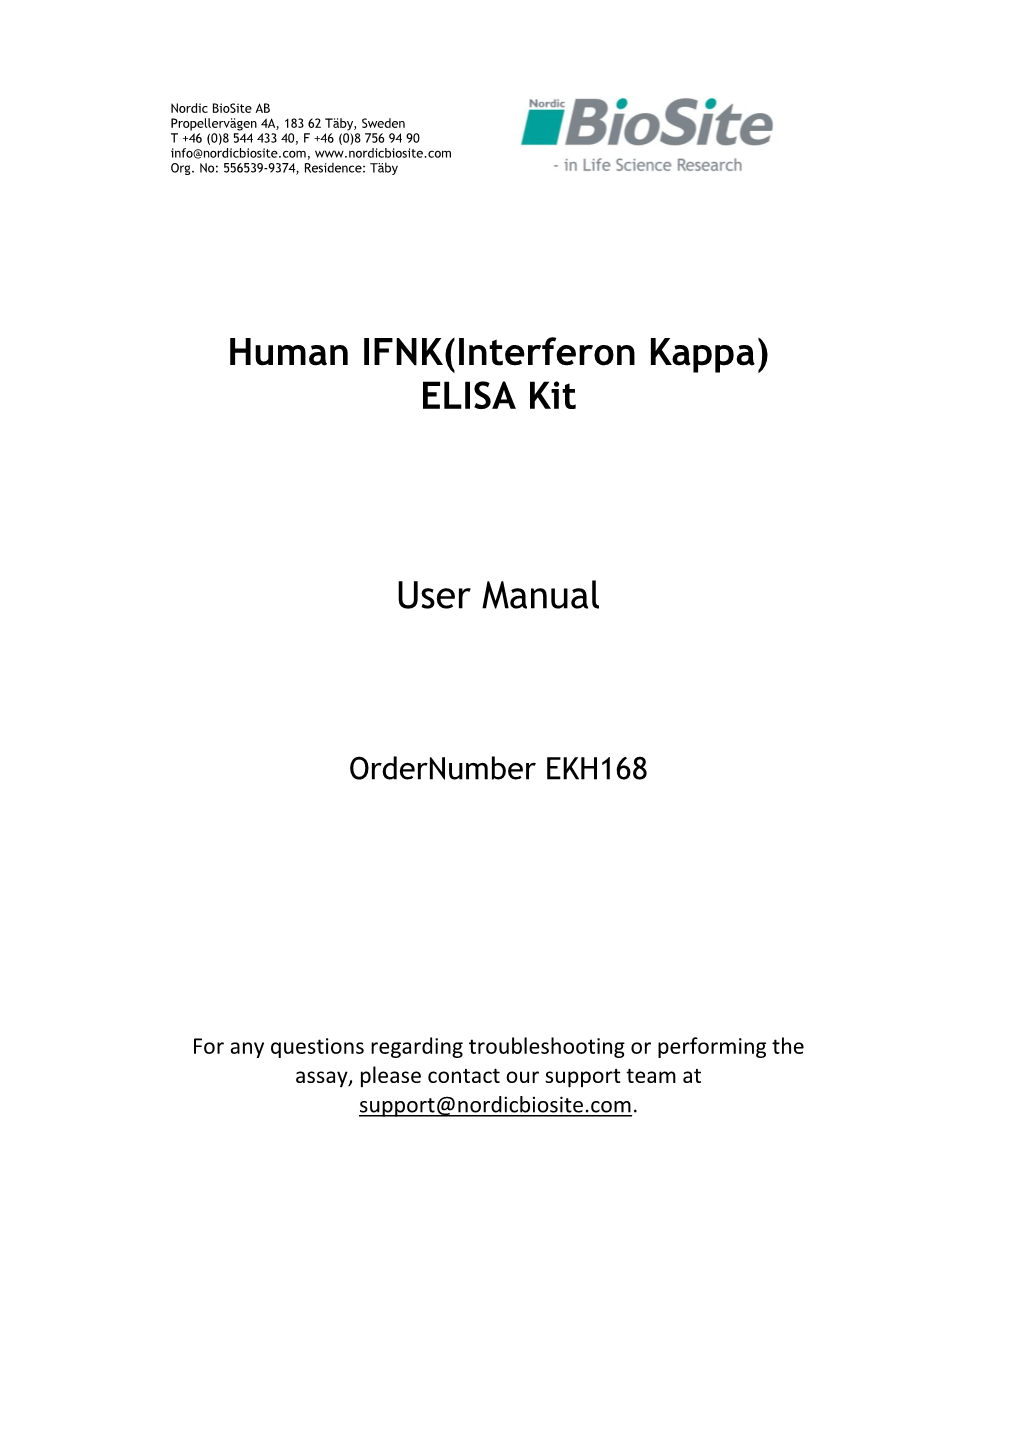 Human IFNK(Interferon Kappa) ELISA Kit User Manual